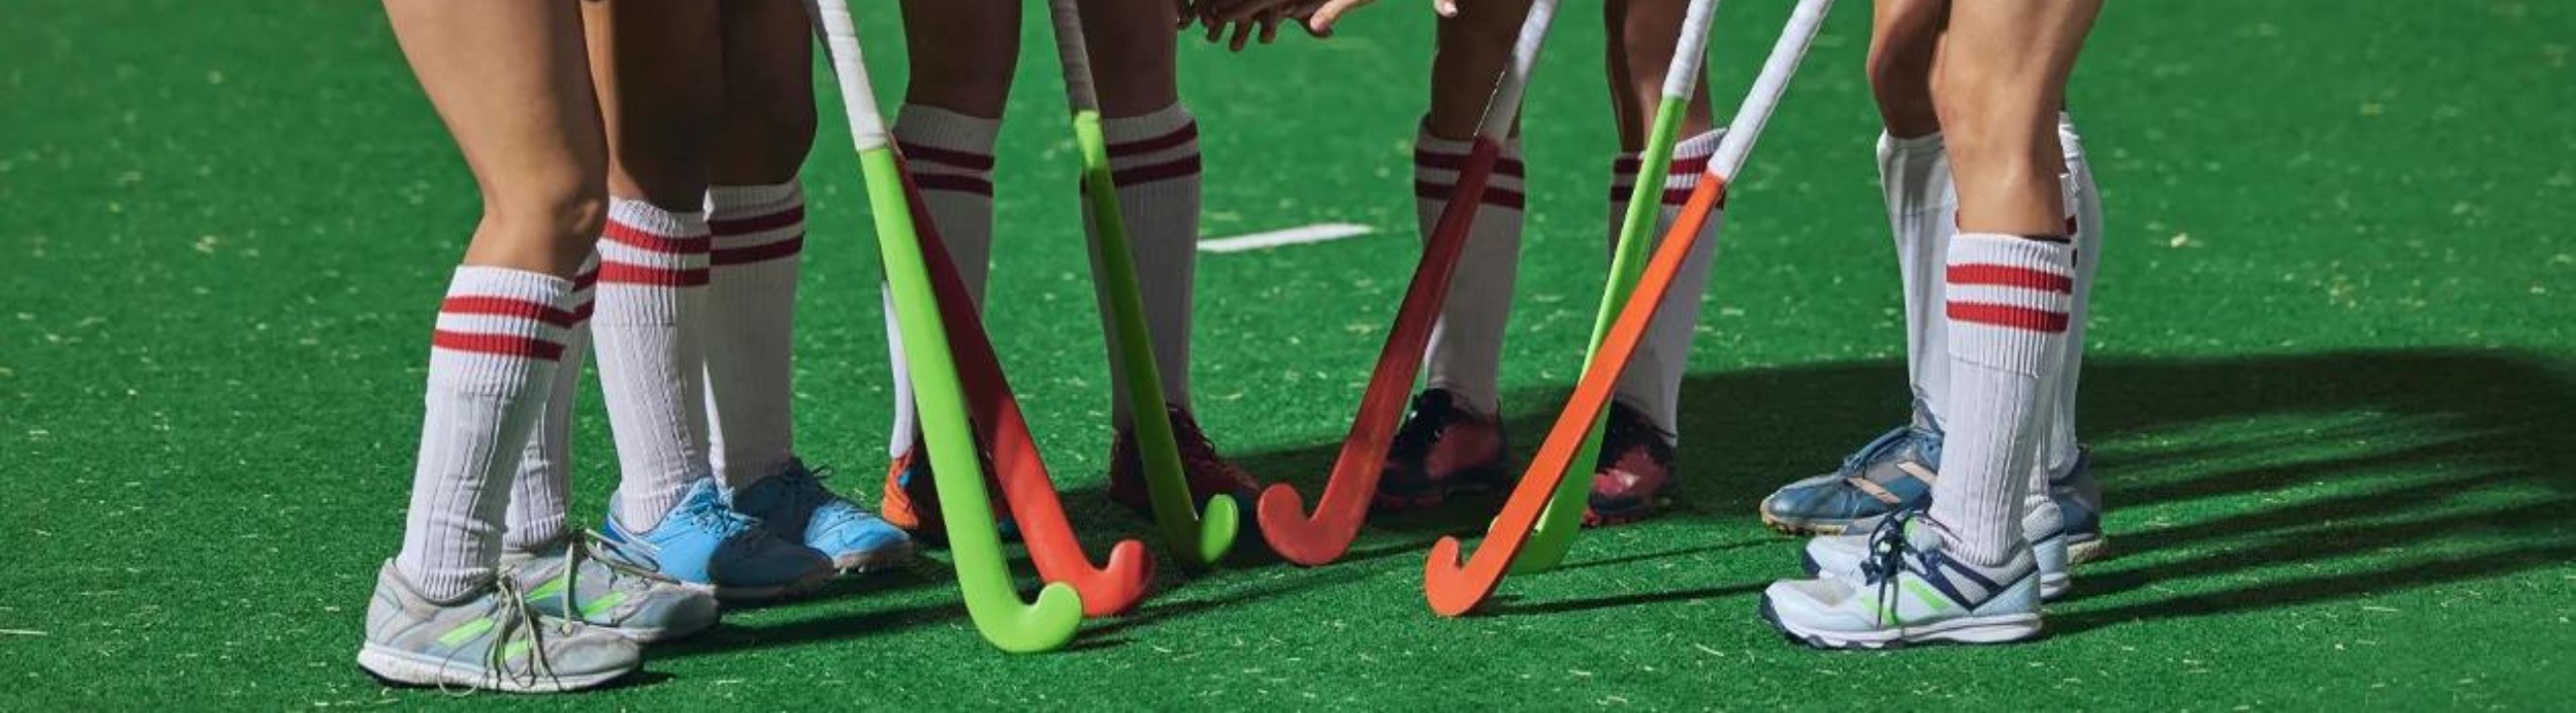 Kids Standard Bow Hockey Sticks